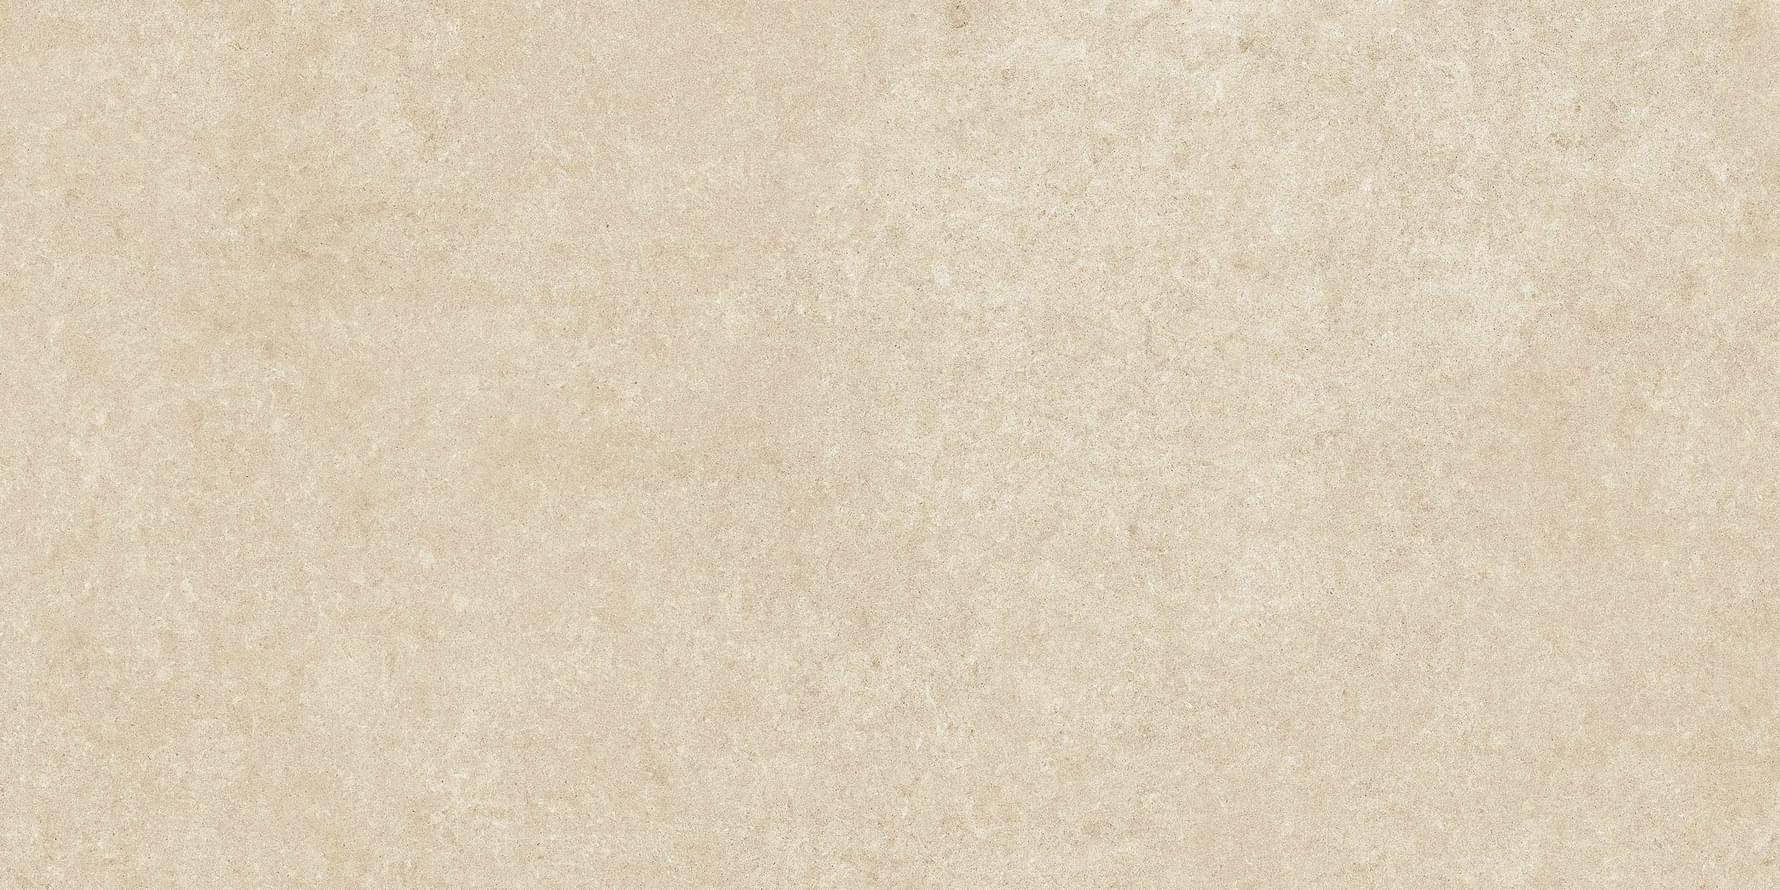 Cerim Elemental Stone Cream Sandstone Naturale 30x60